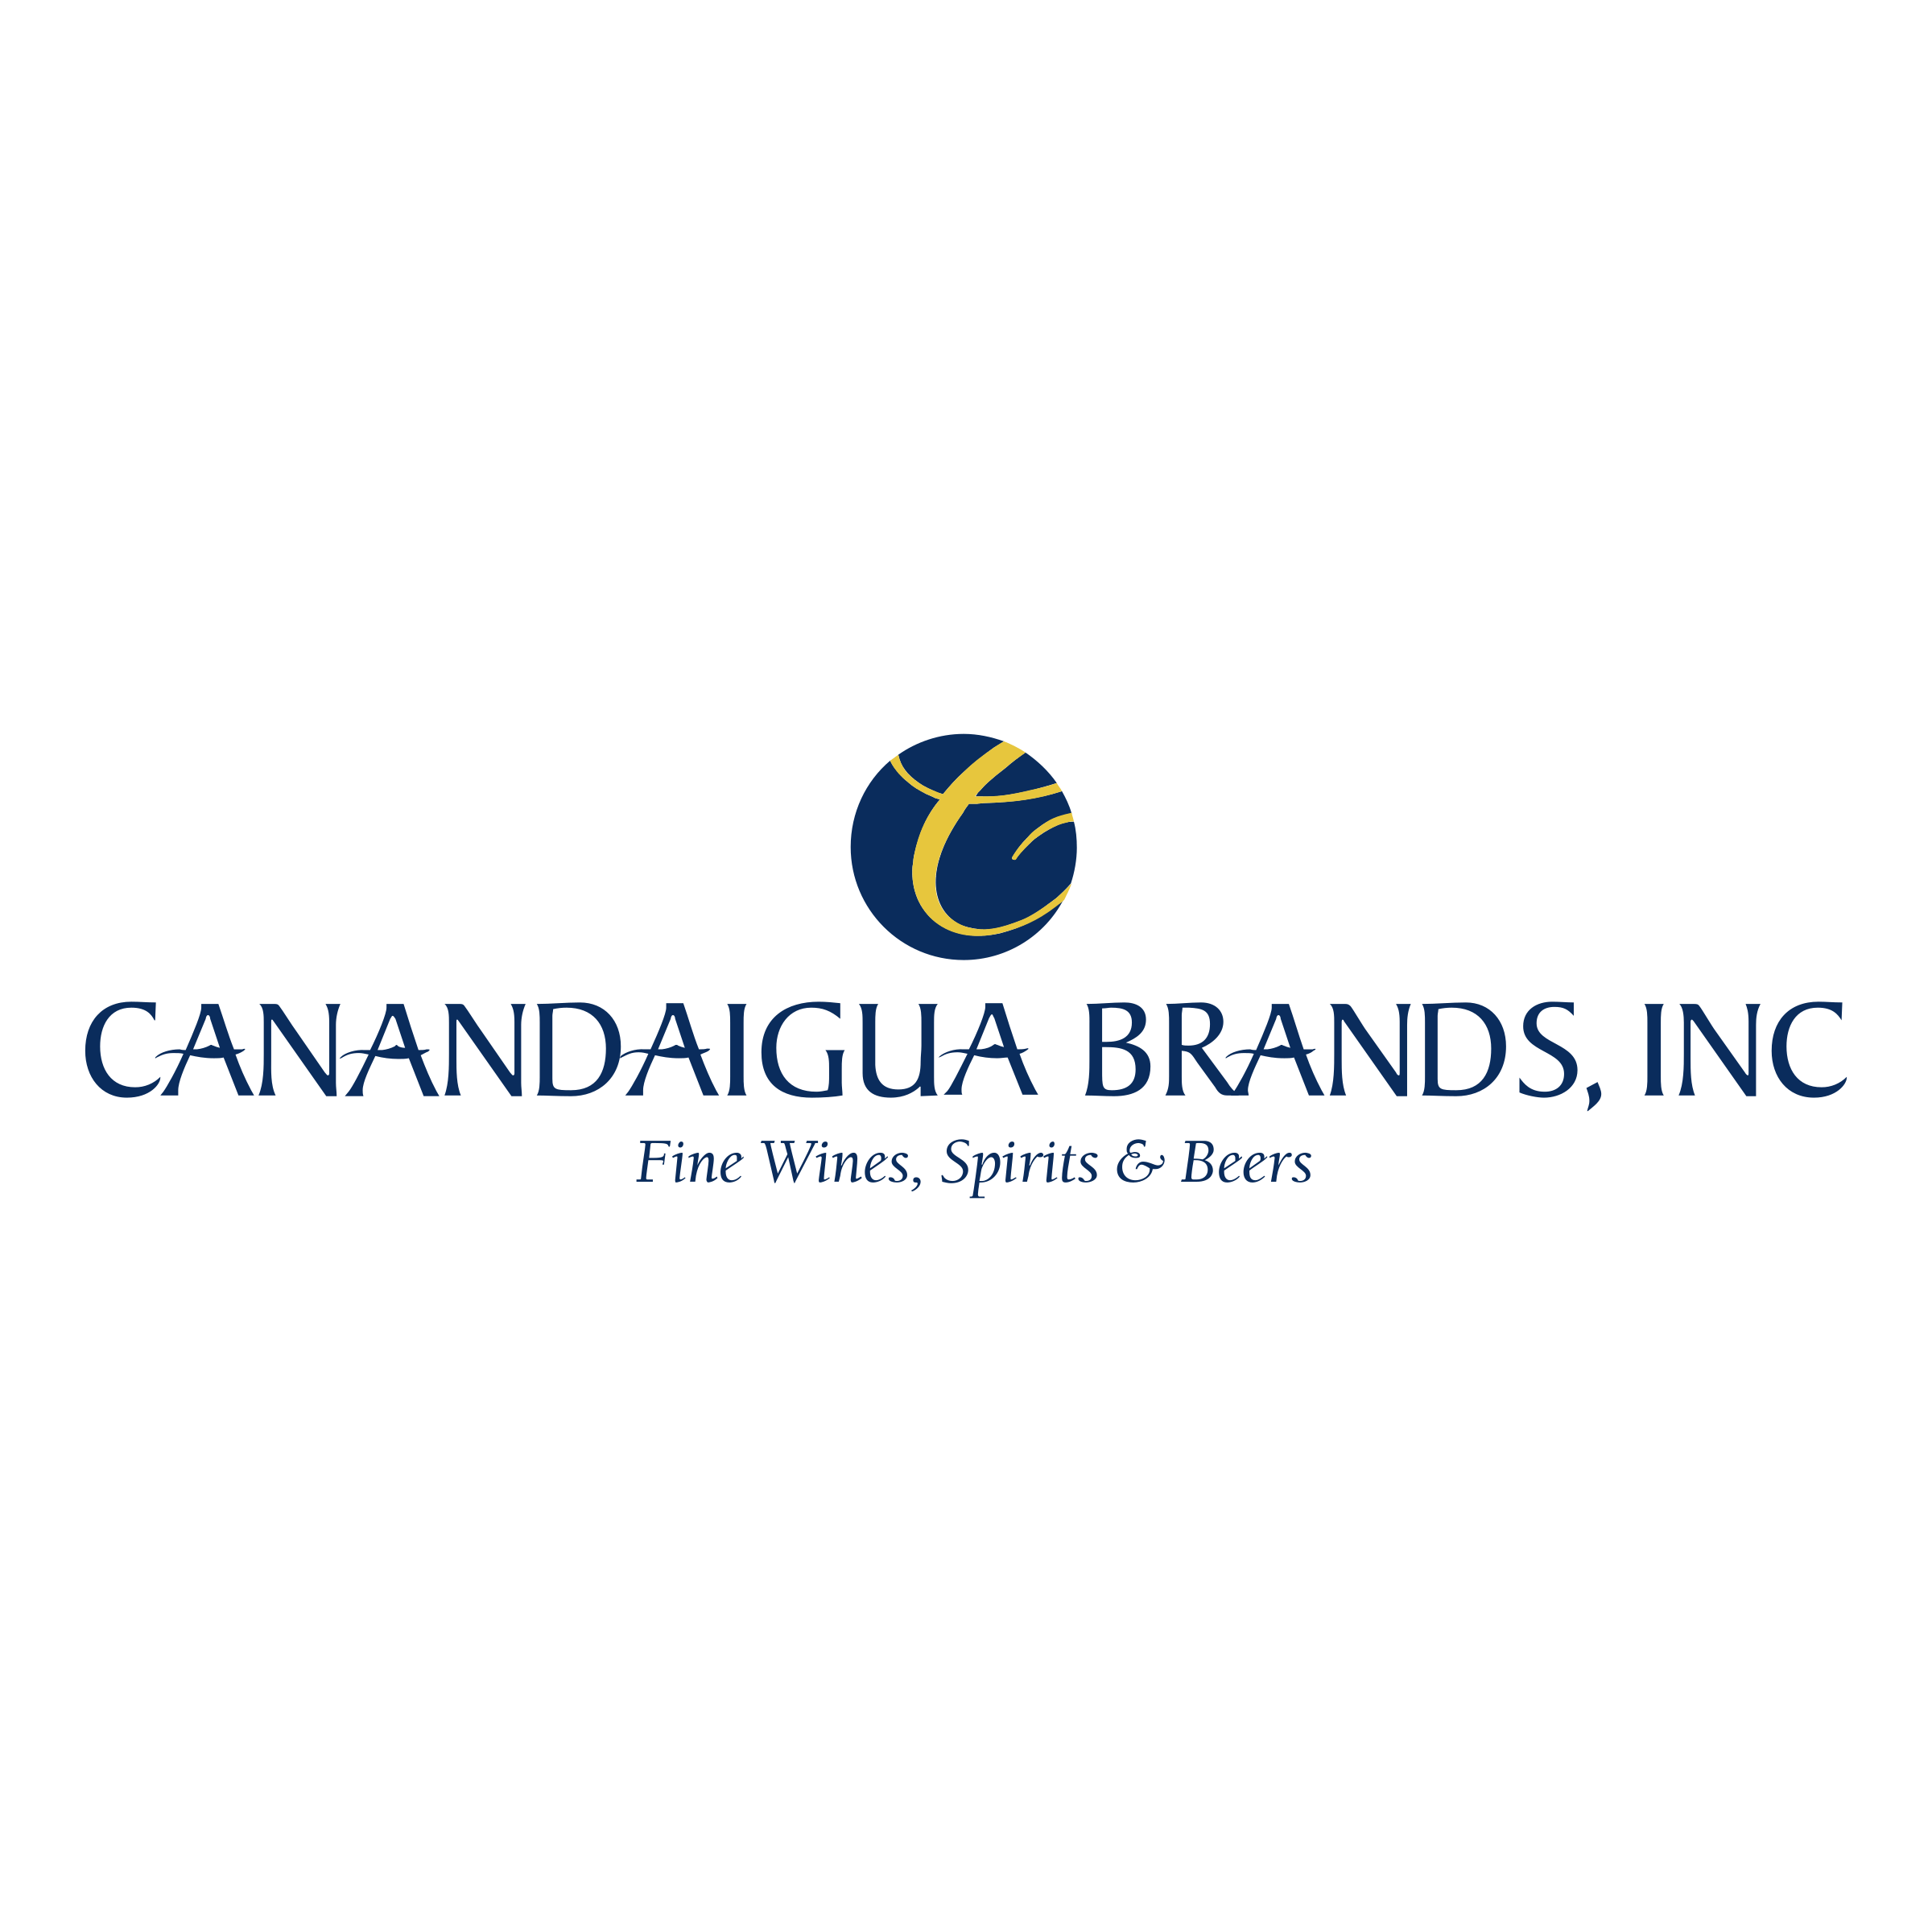 Canandaigua Logo - Canandaigua Brands Logo PNG Transparent & SVG Vector - Freebie Supply